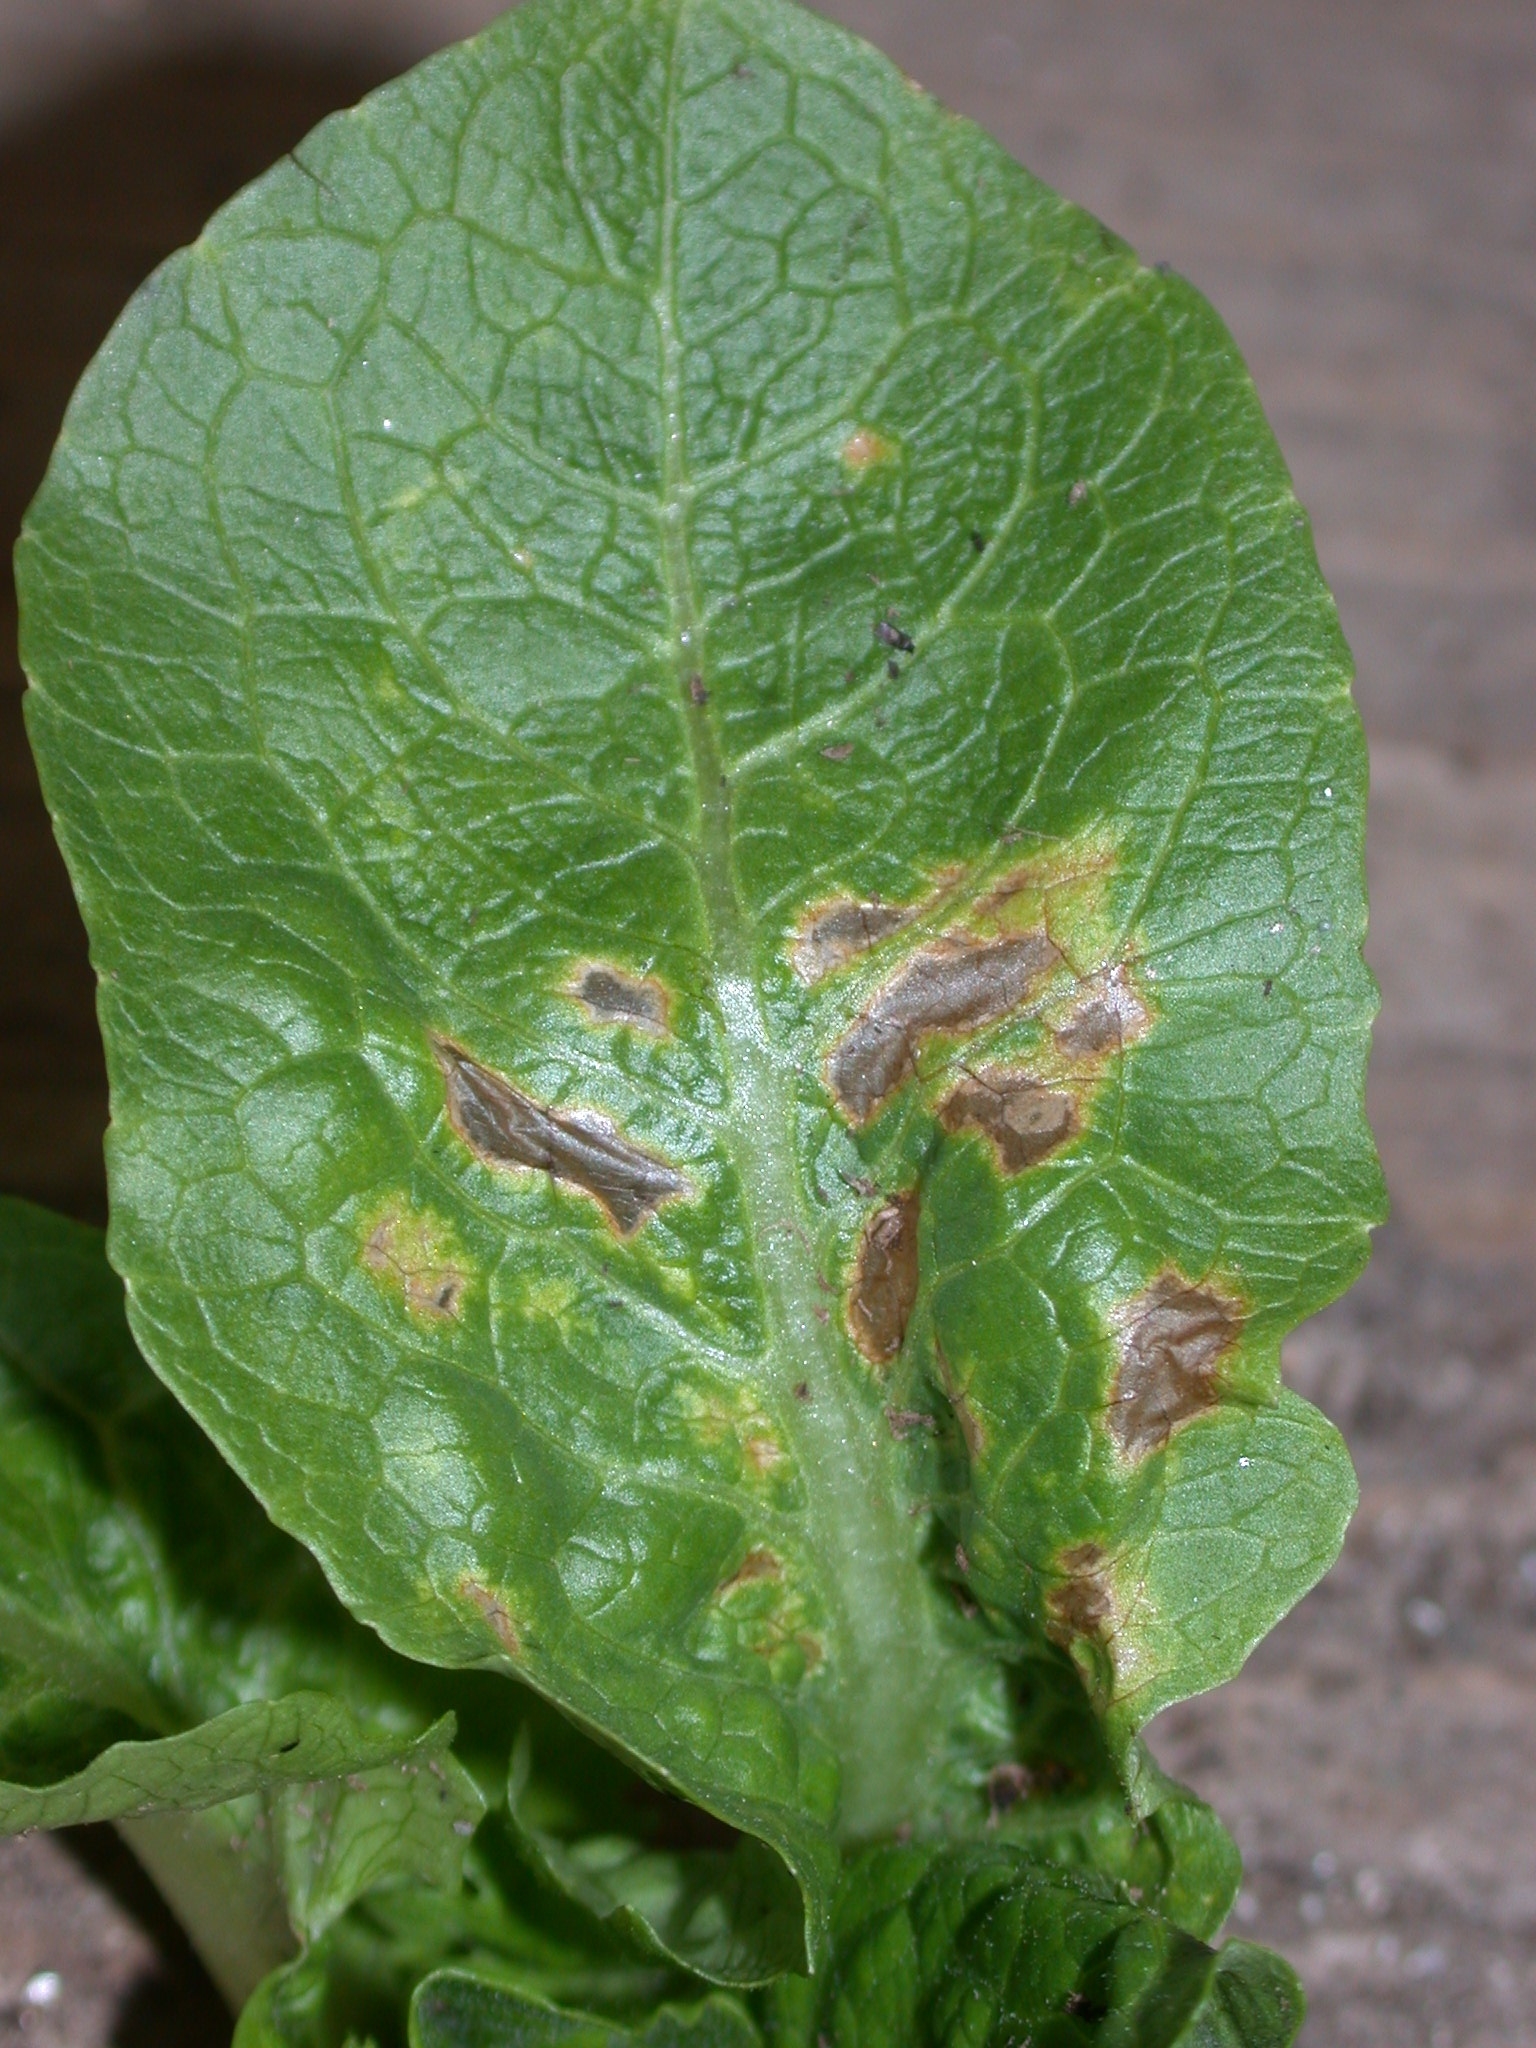 frost damage on plants